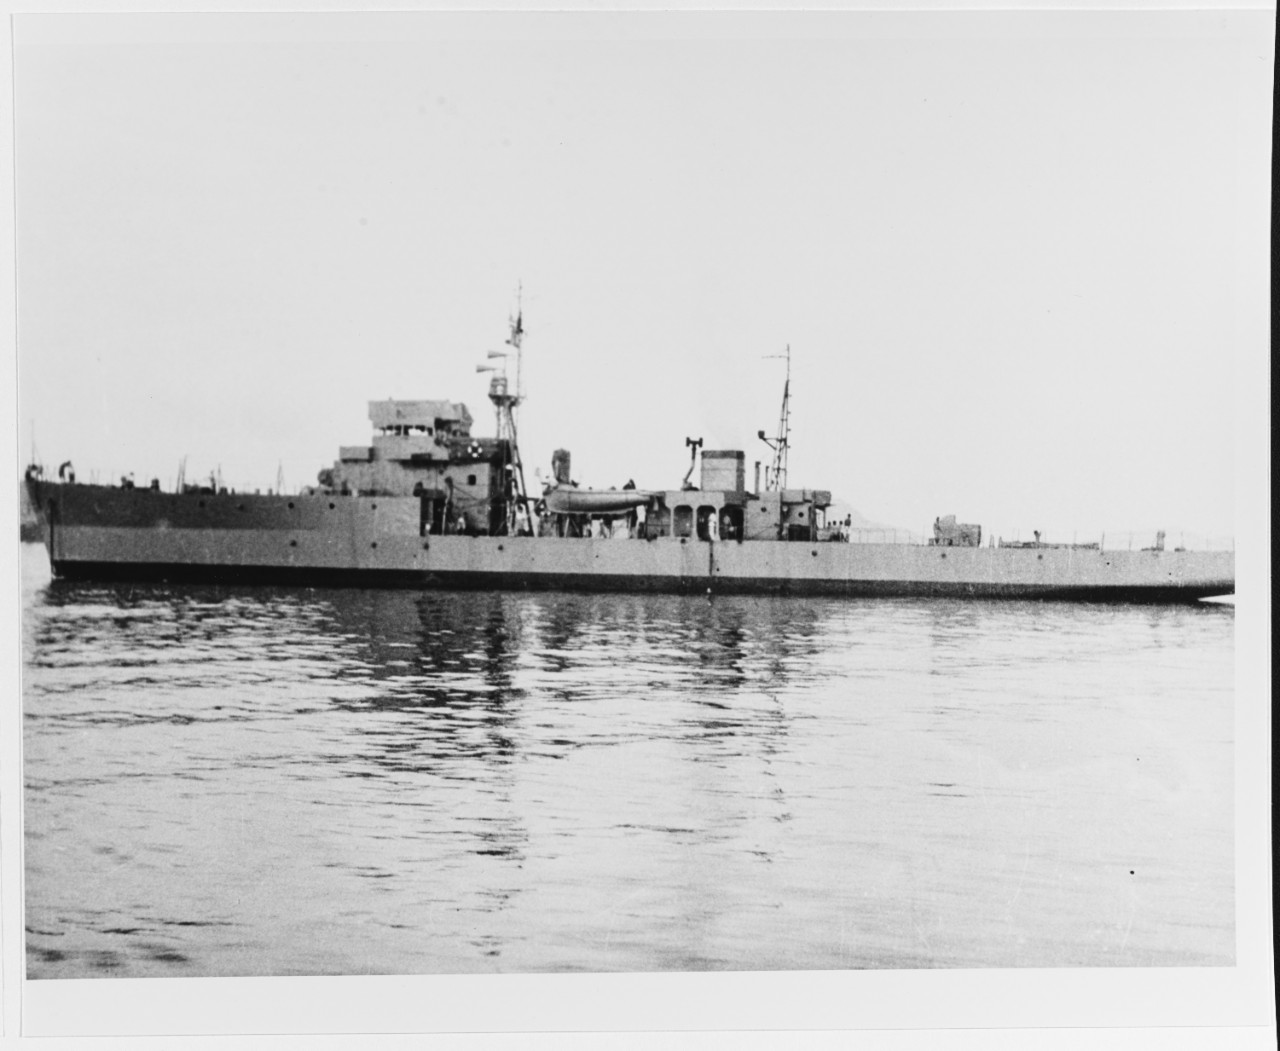 Japanese "Type C" ("KAIBOKAN") escort ship